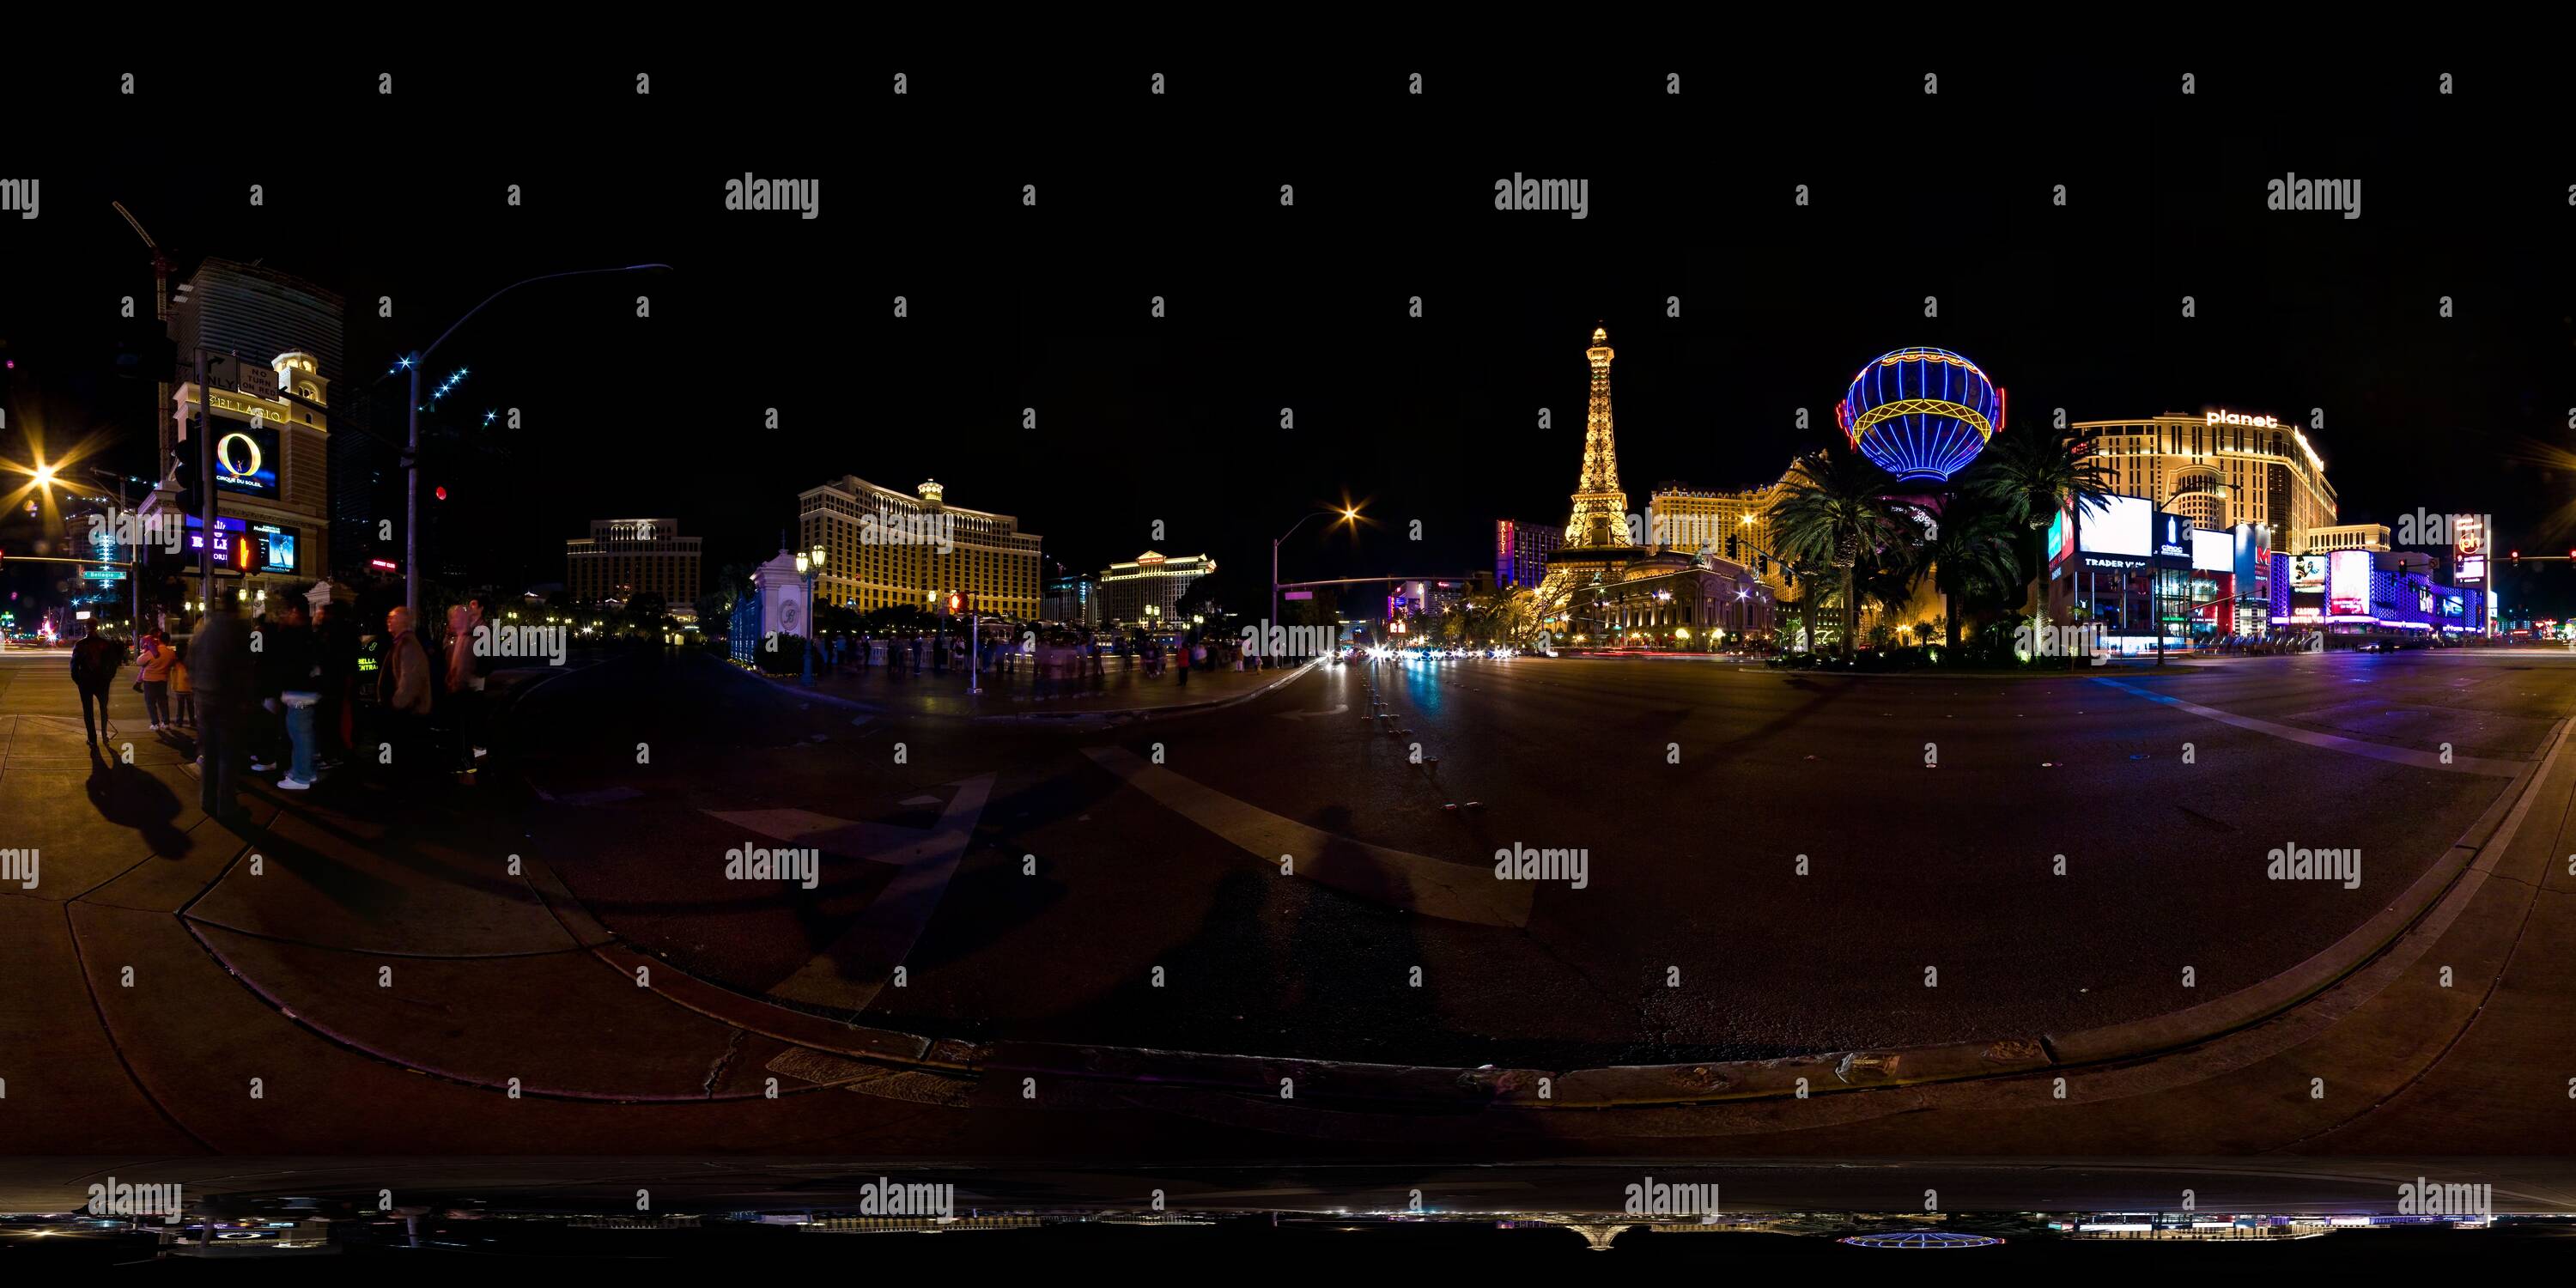 360 degree panoramic view of Las Vegas by Night : Between Bellagio & Paris